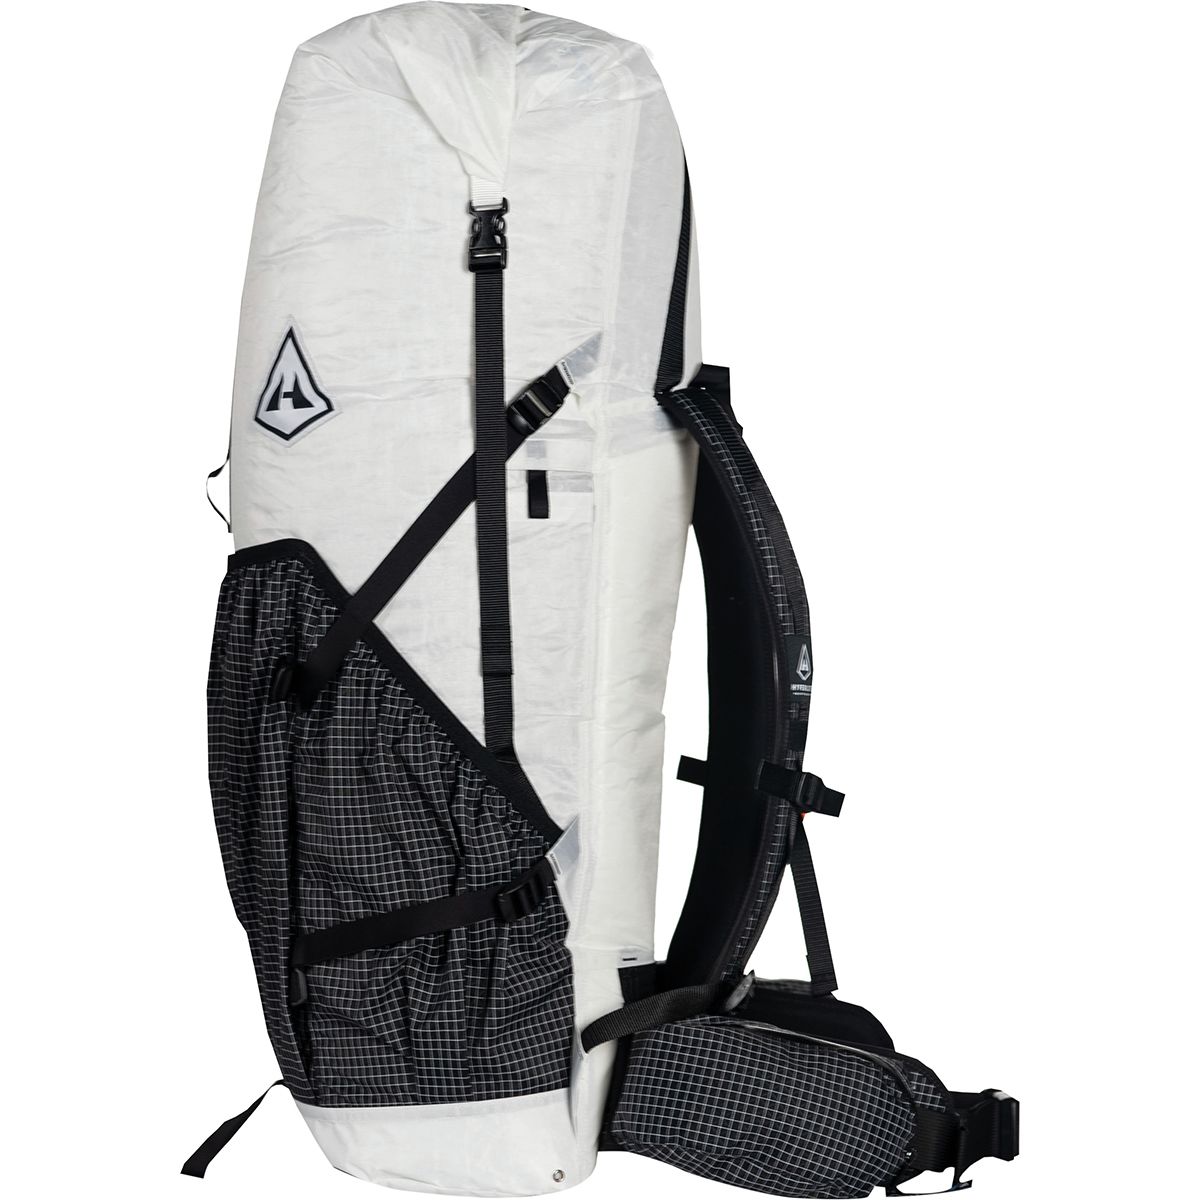 Hyperlite Mountain Gear 3400 Southwest 55L Backpack | Backcountry.com